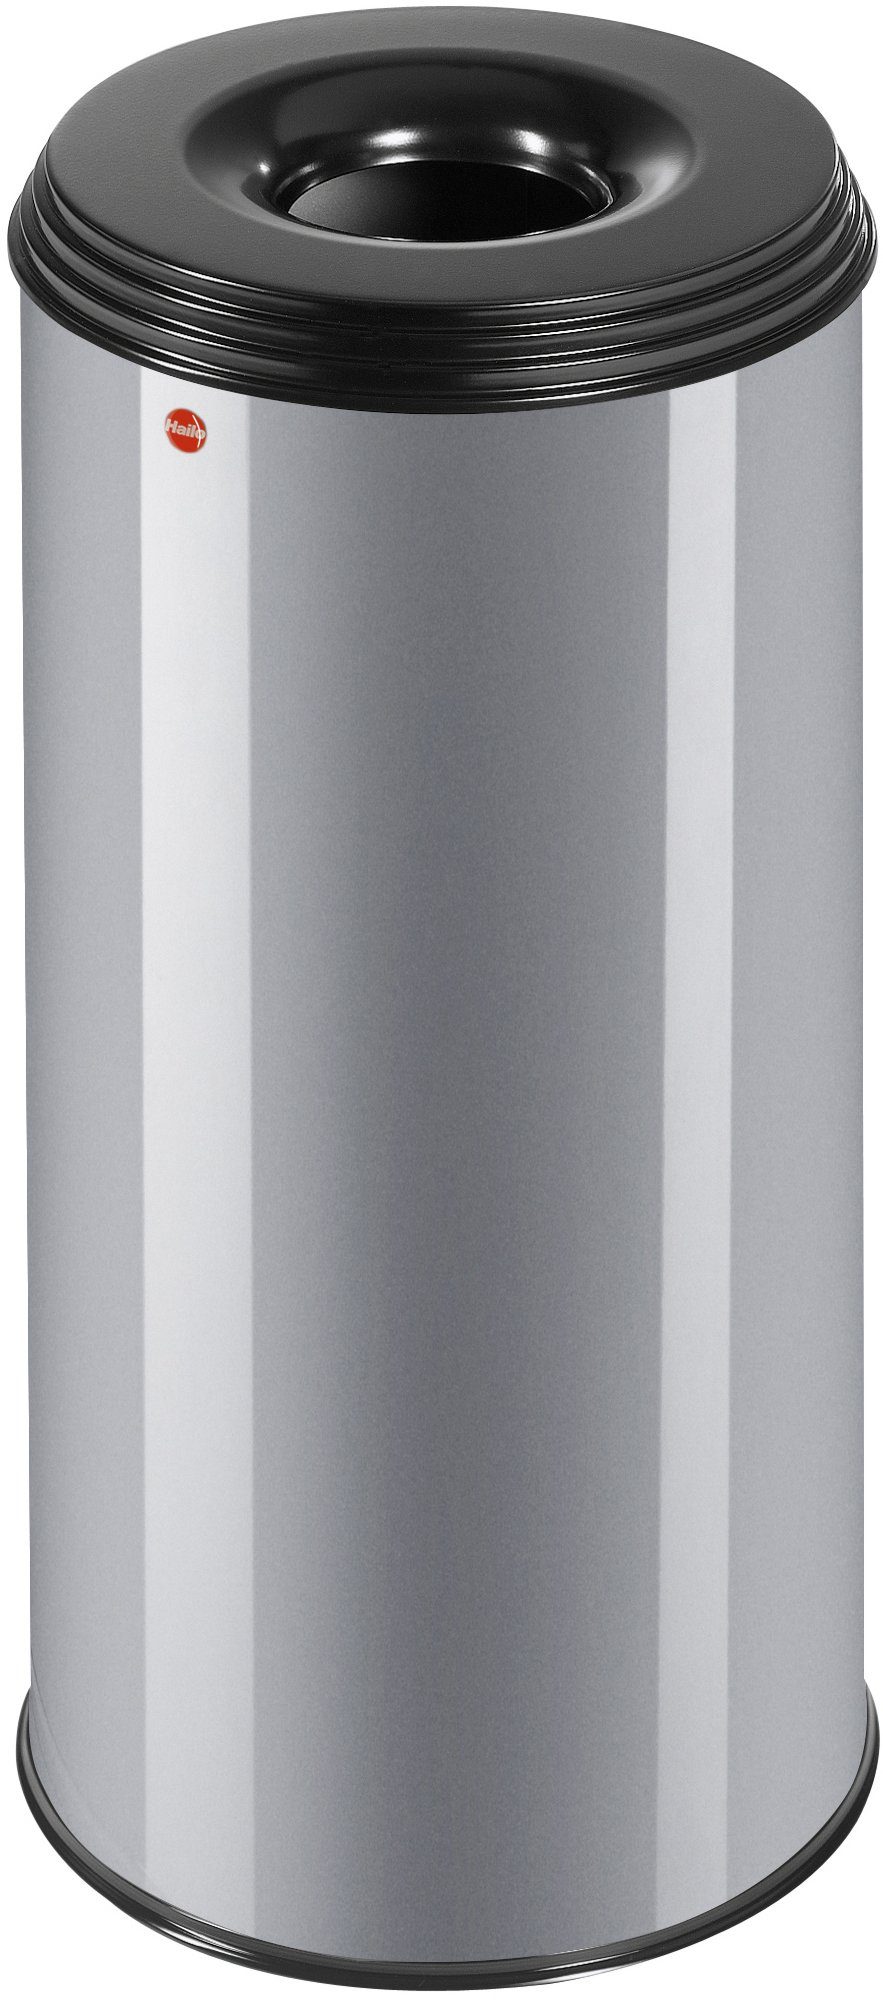 Hailo Mülleimer ProfiLine Safe XL, 45 Liter, Stahlblech, feuersicherer Papierkorb, Made in Germany aluminiumfarben/schwarz